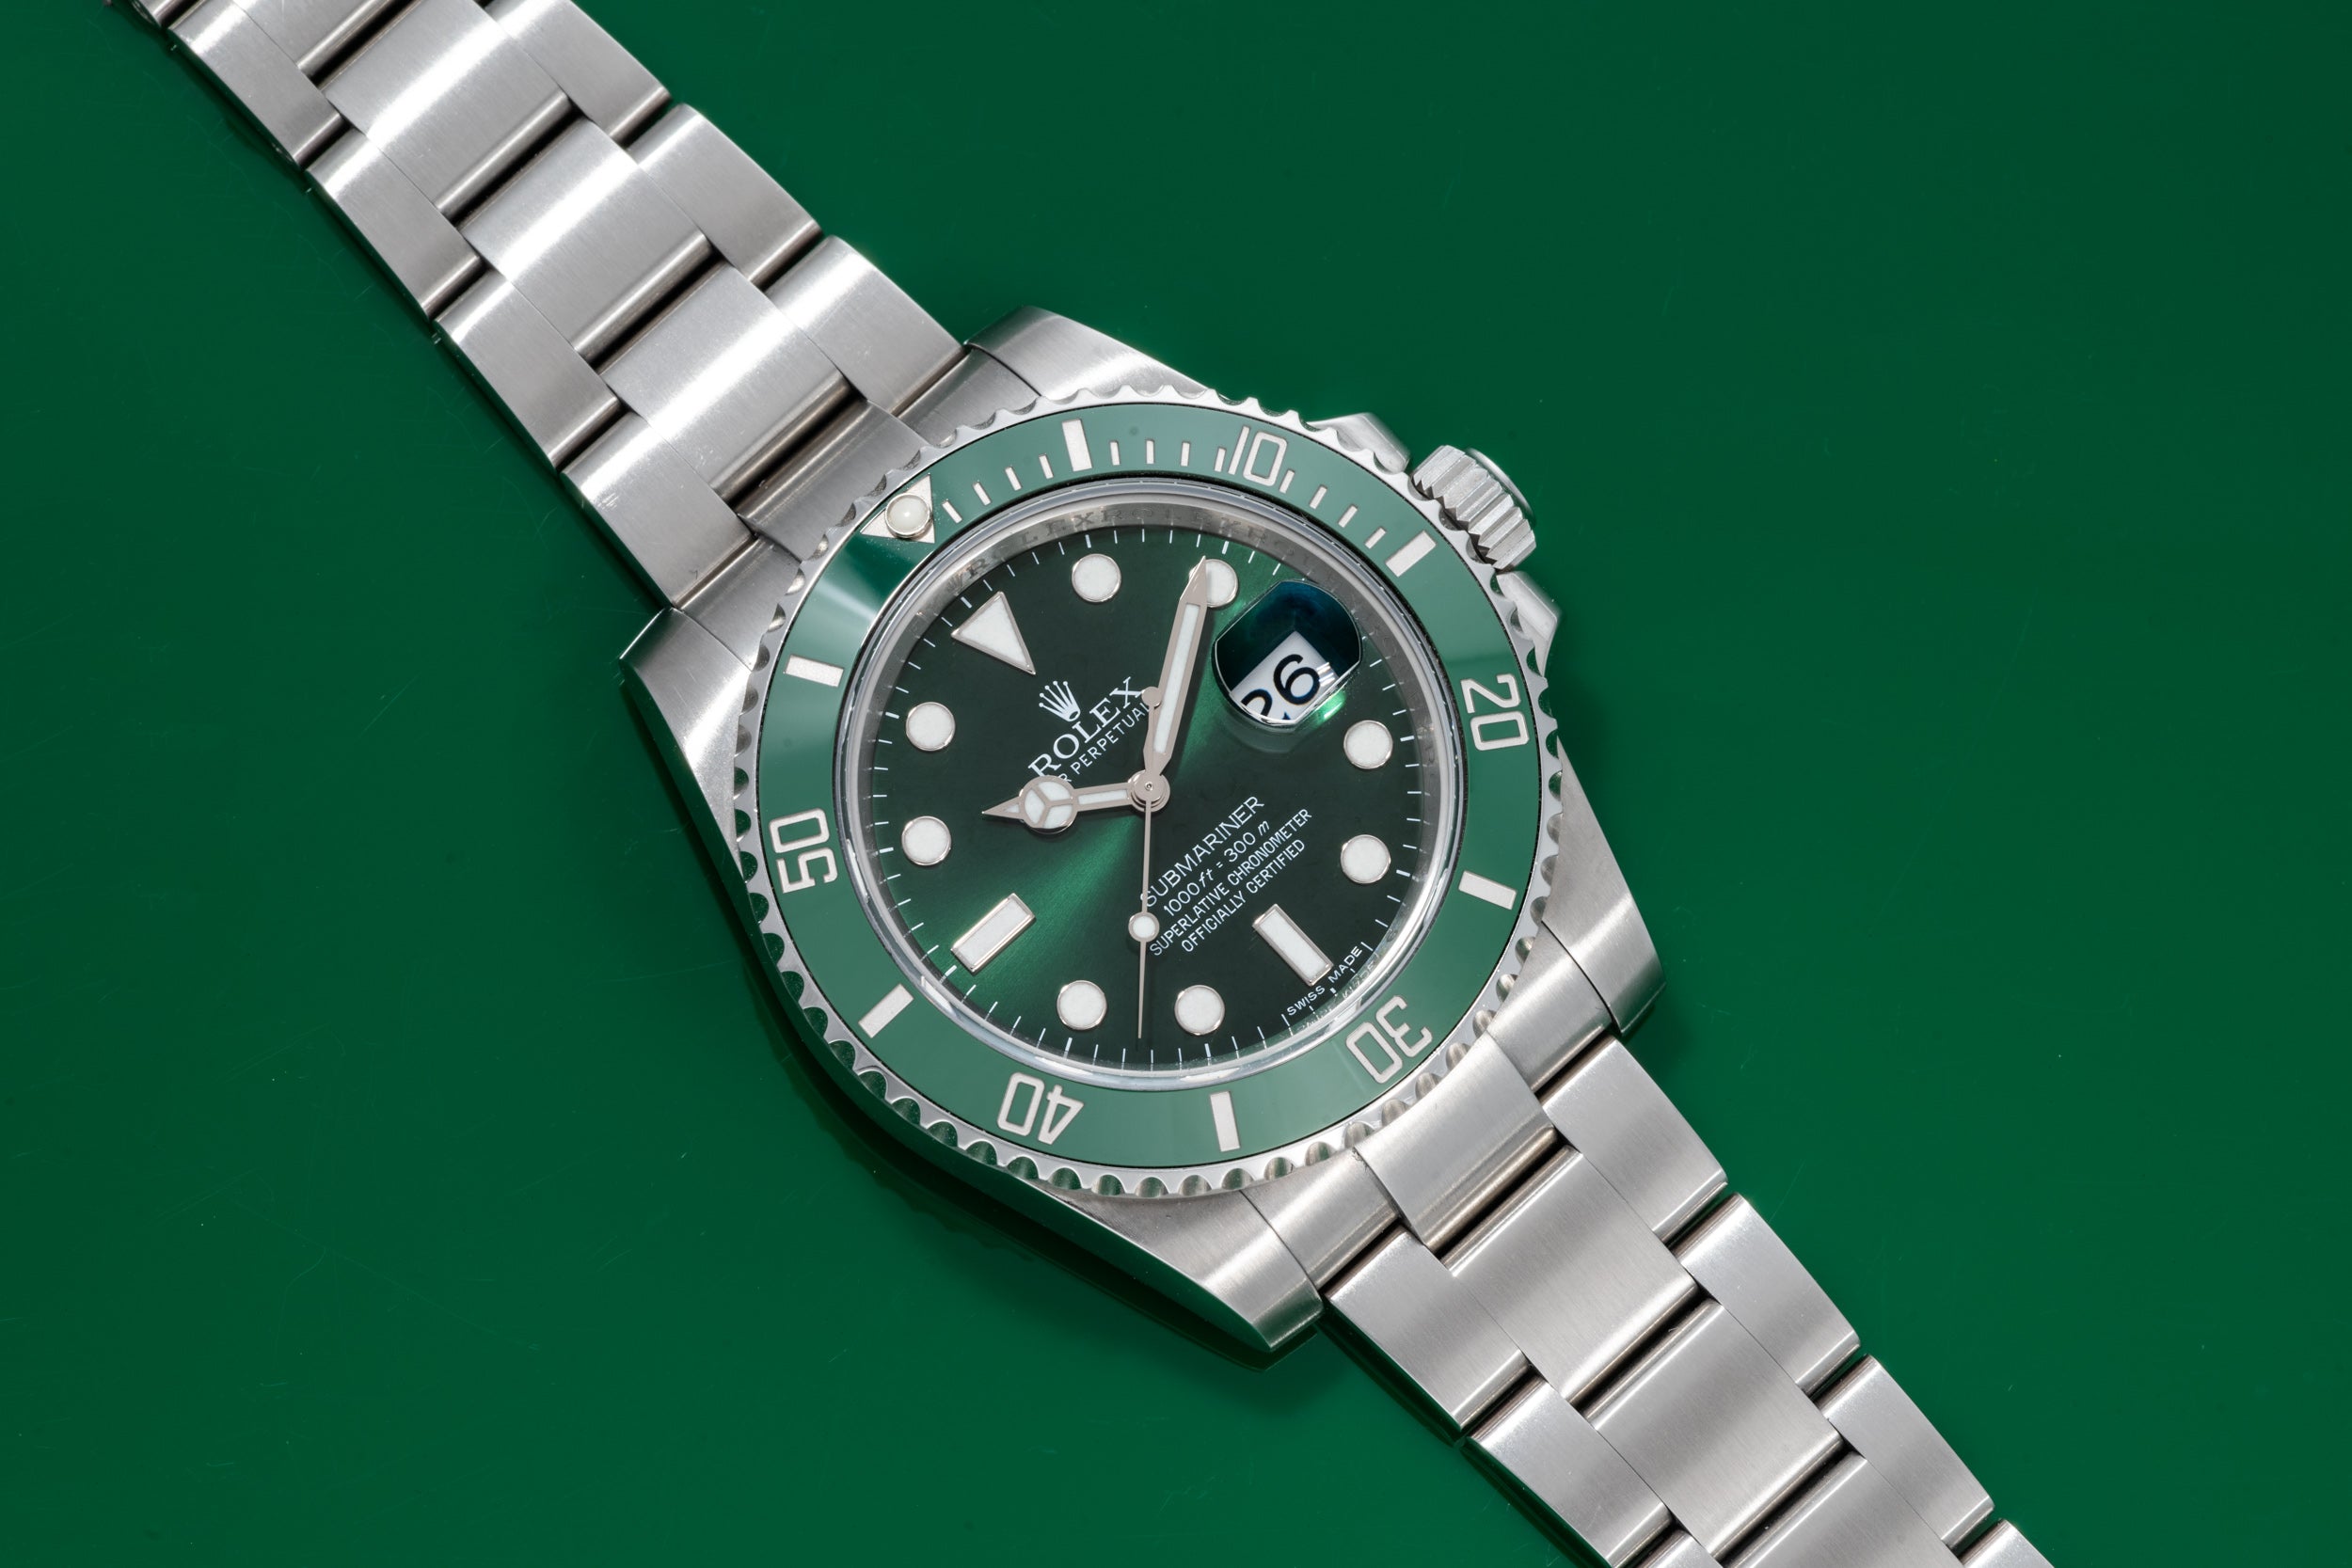 Rolex Submariner Hulk 116610LV Update - What Makes a Watch Special